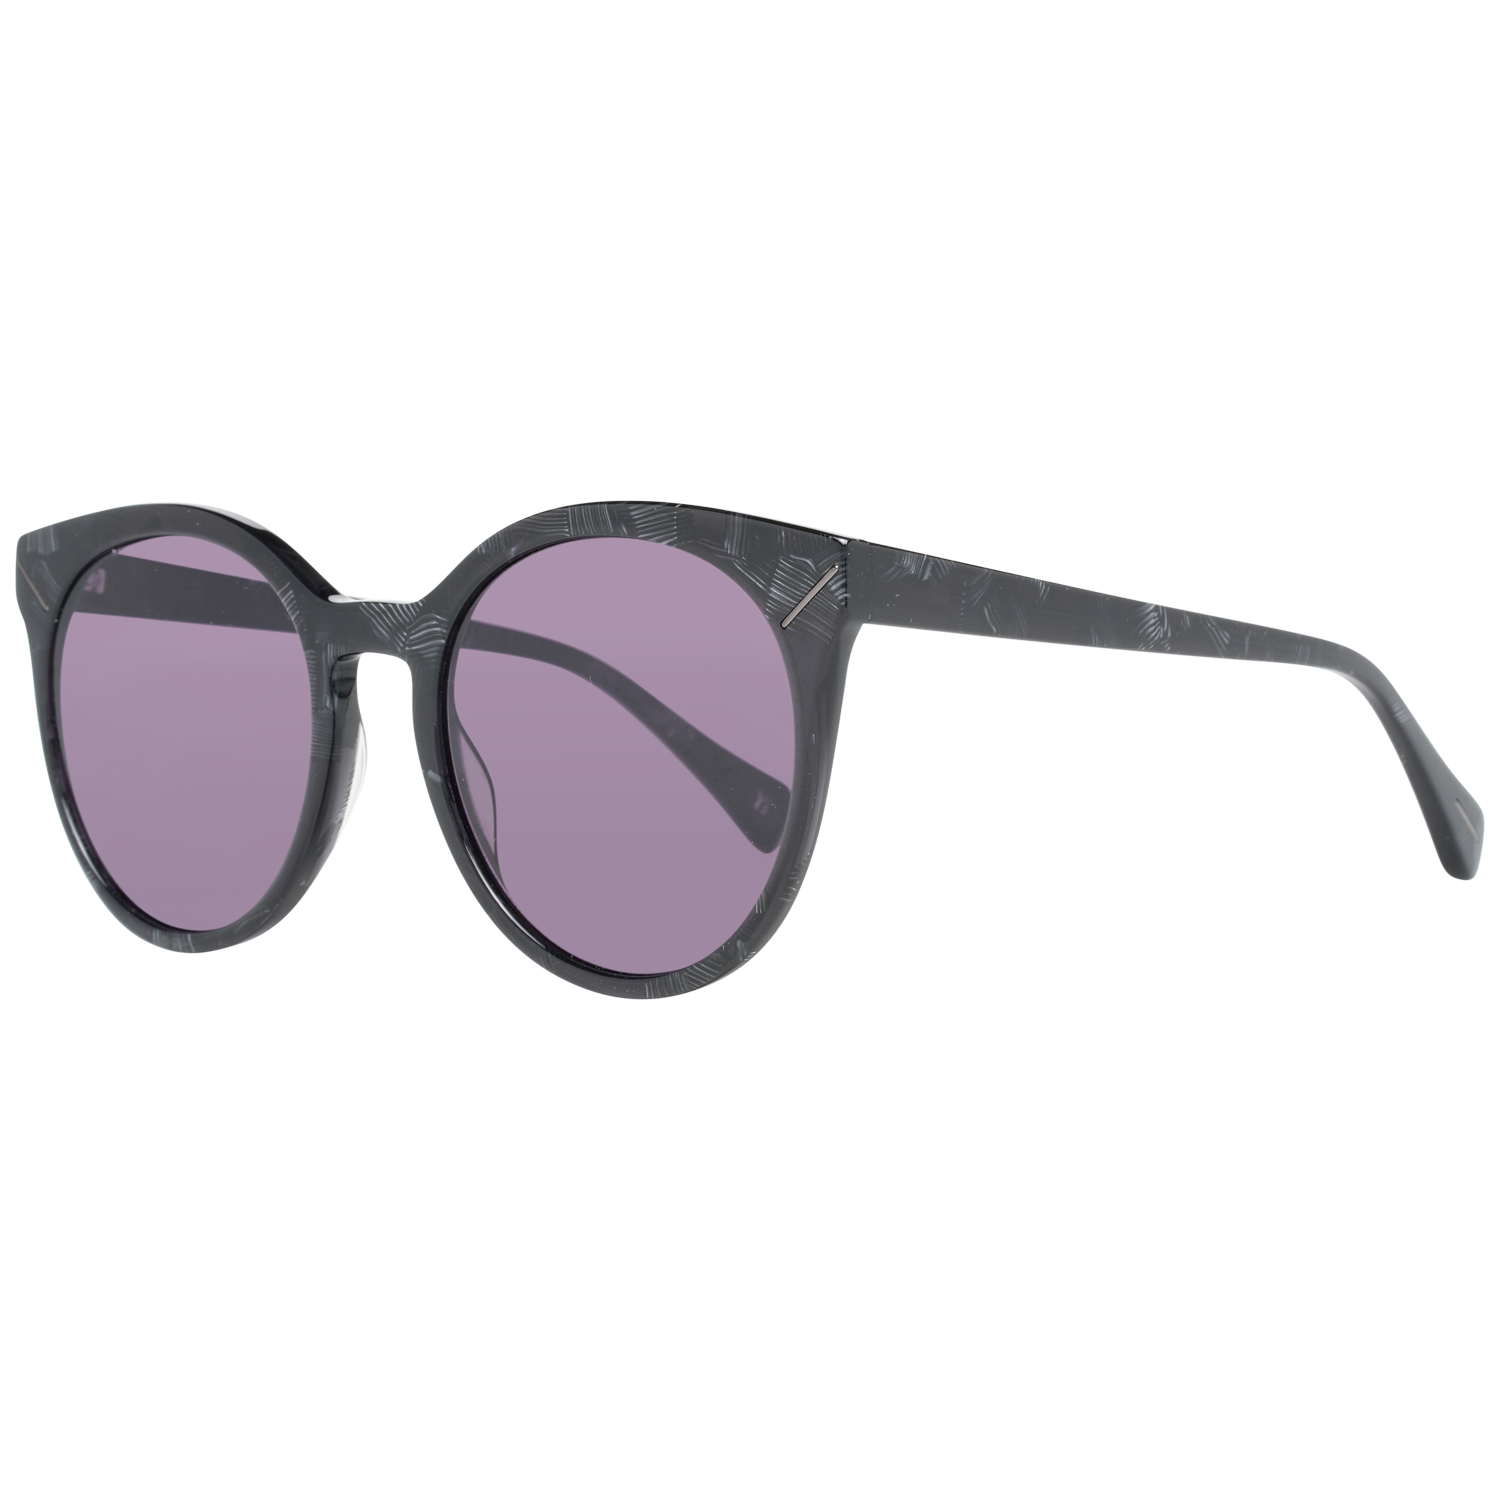 Yohji Yamamoto Sunglasses YS5003 024 54 Grey